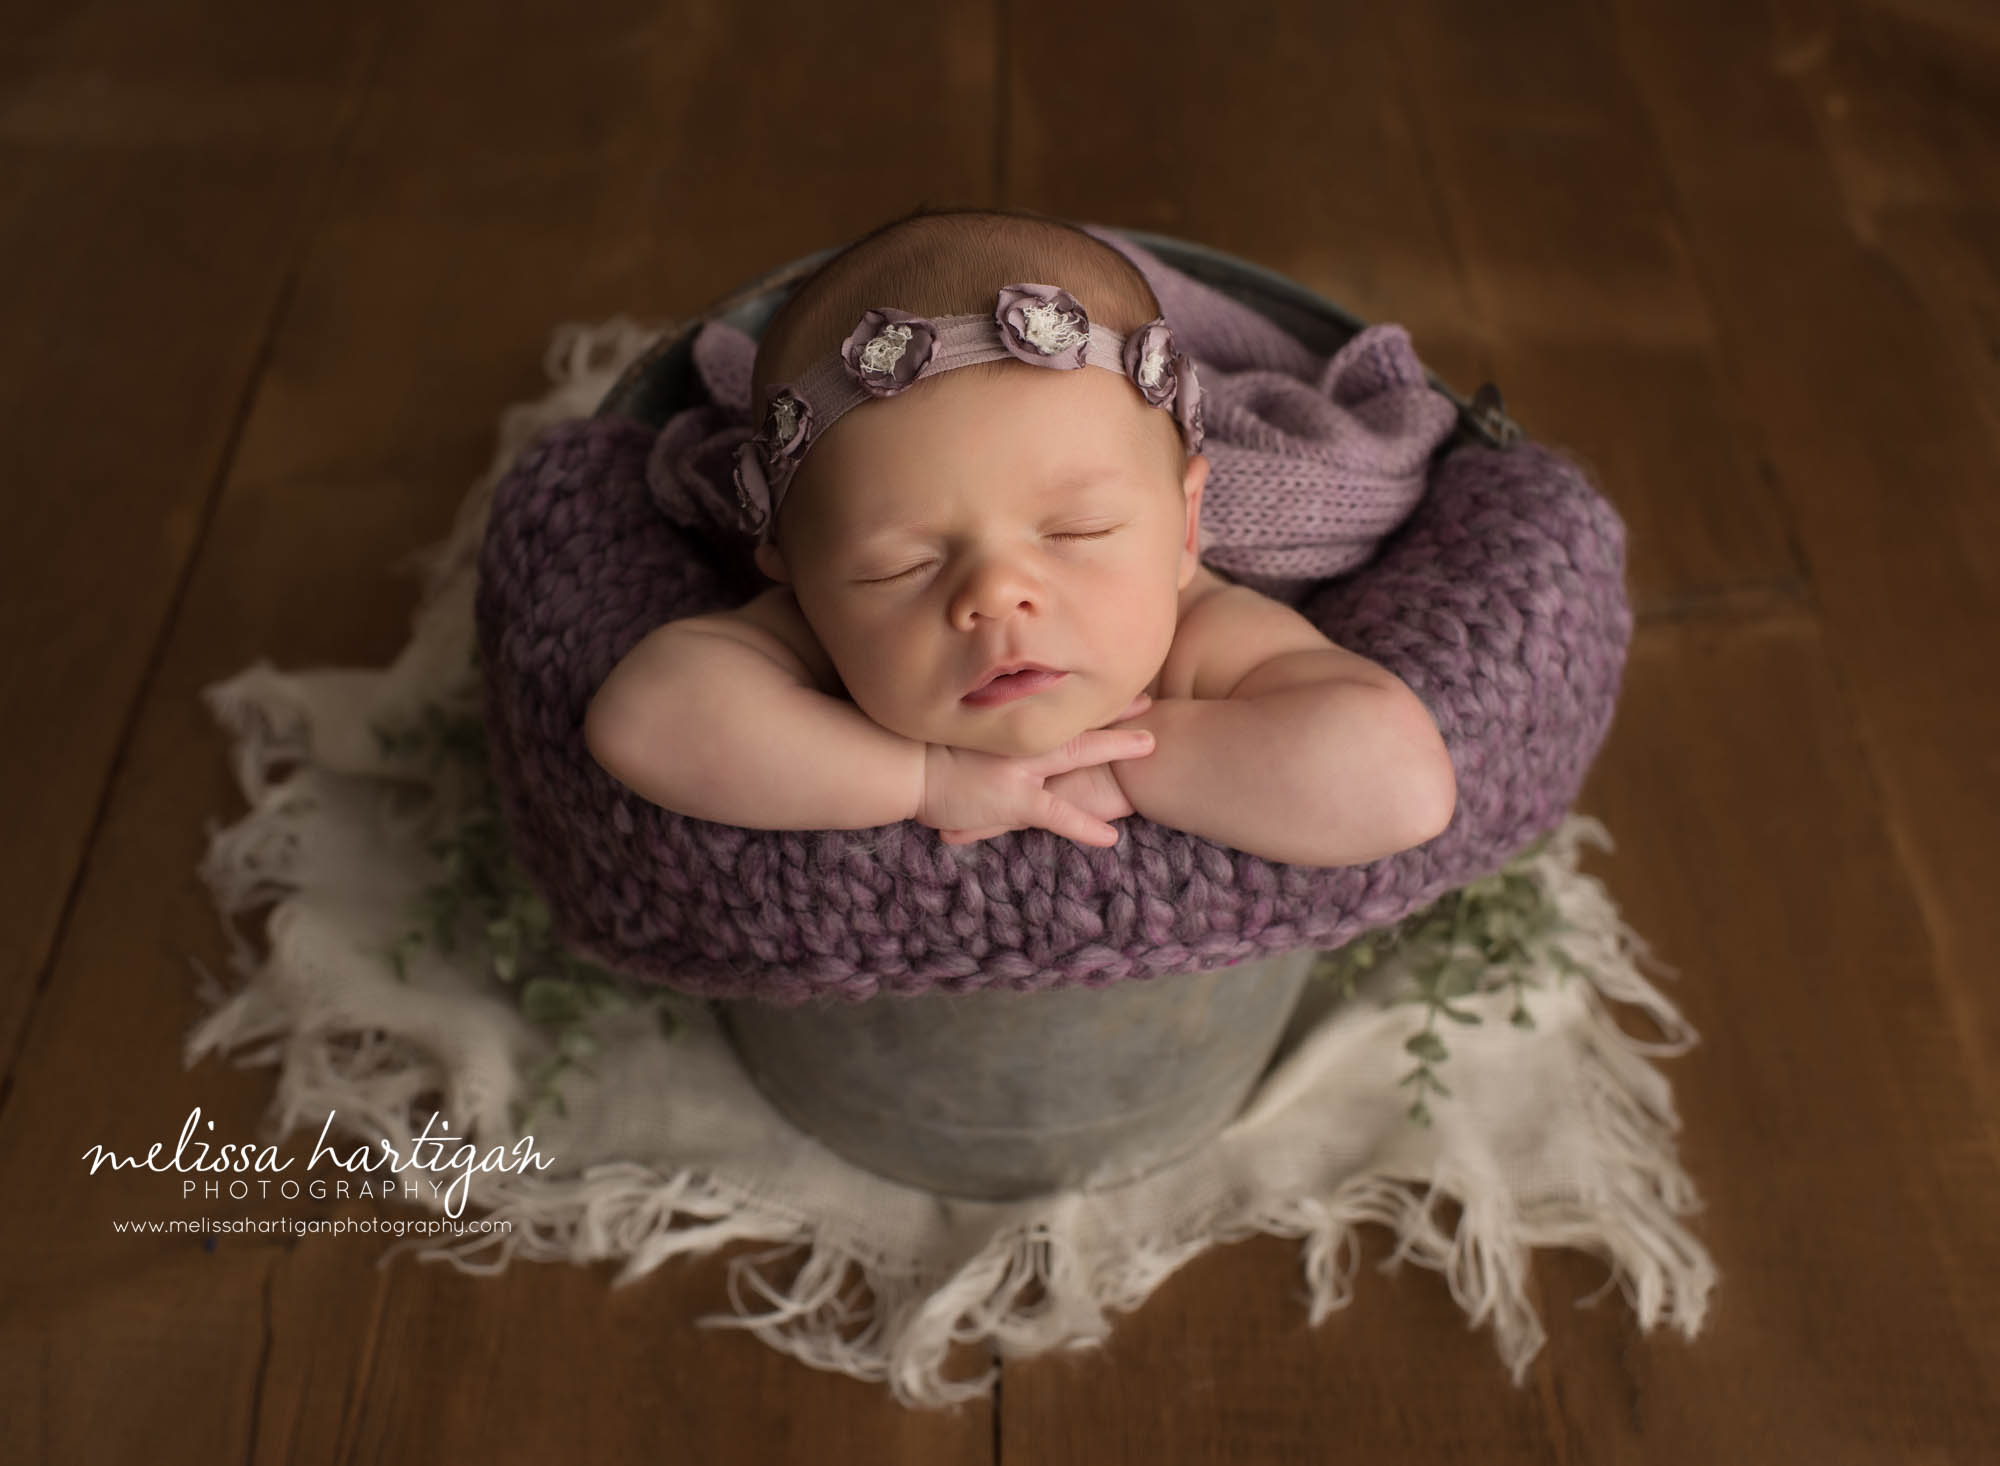 newborn baby girl posed in bucket with purple knitted layer wearing purple flower headband